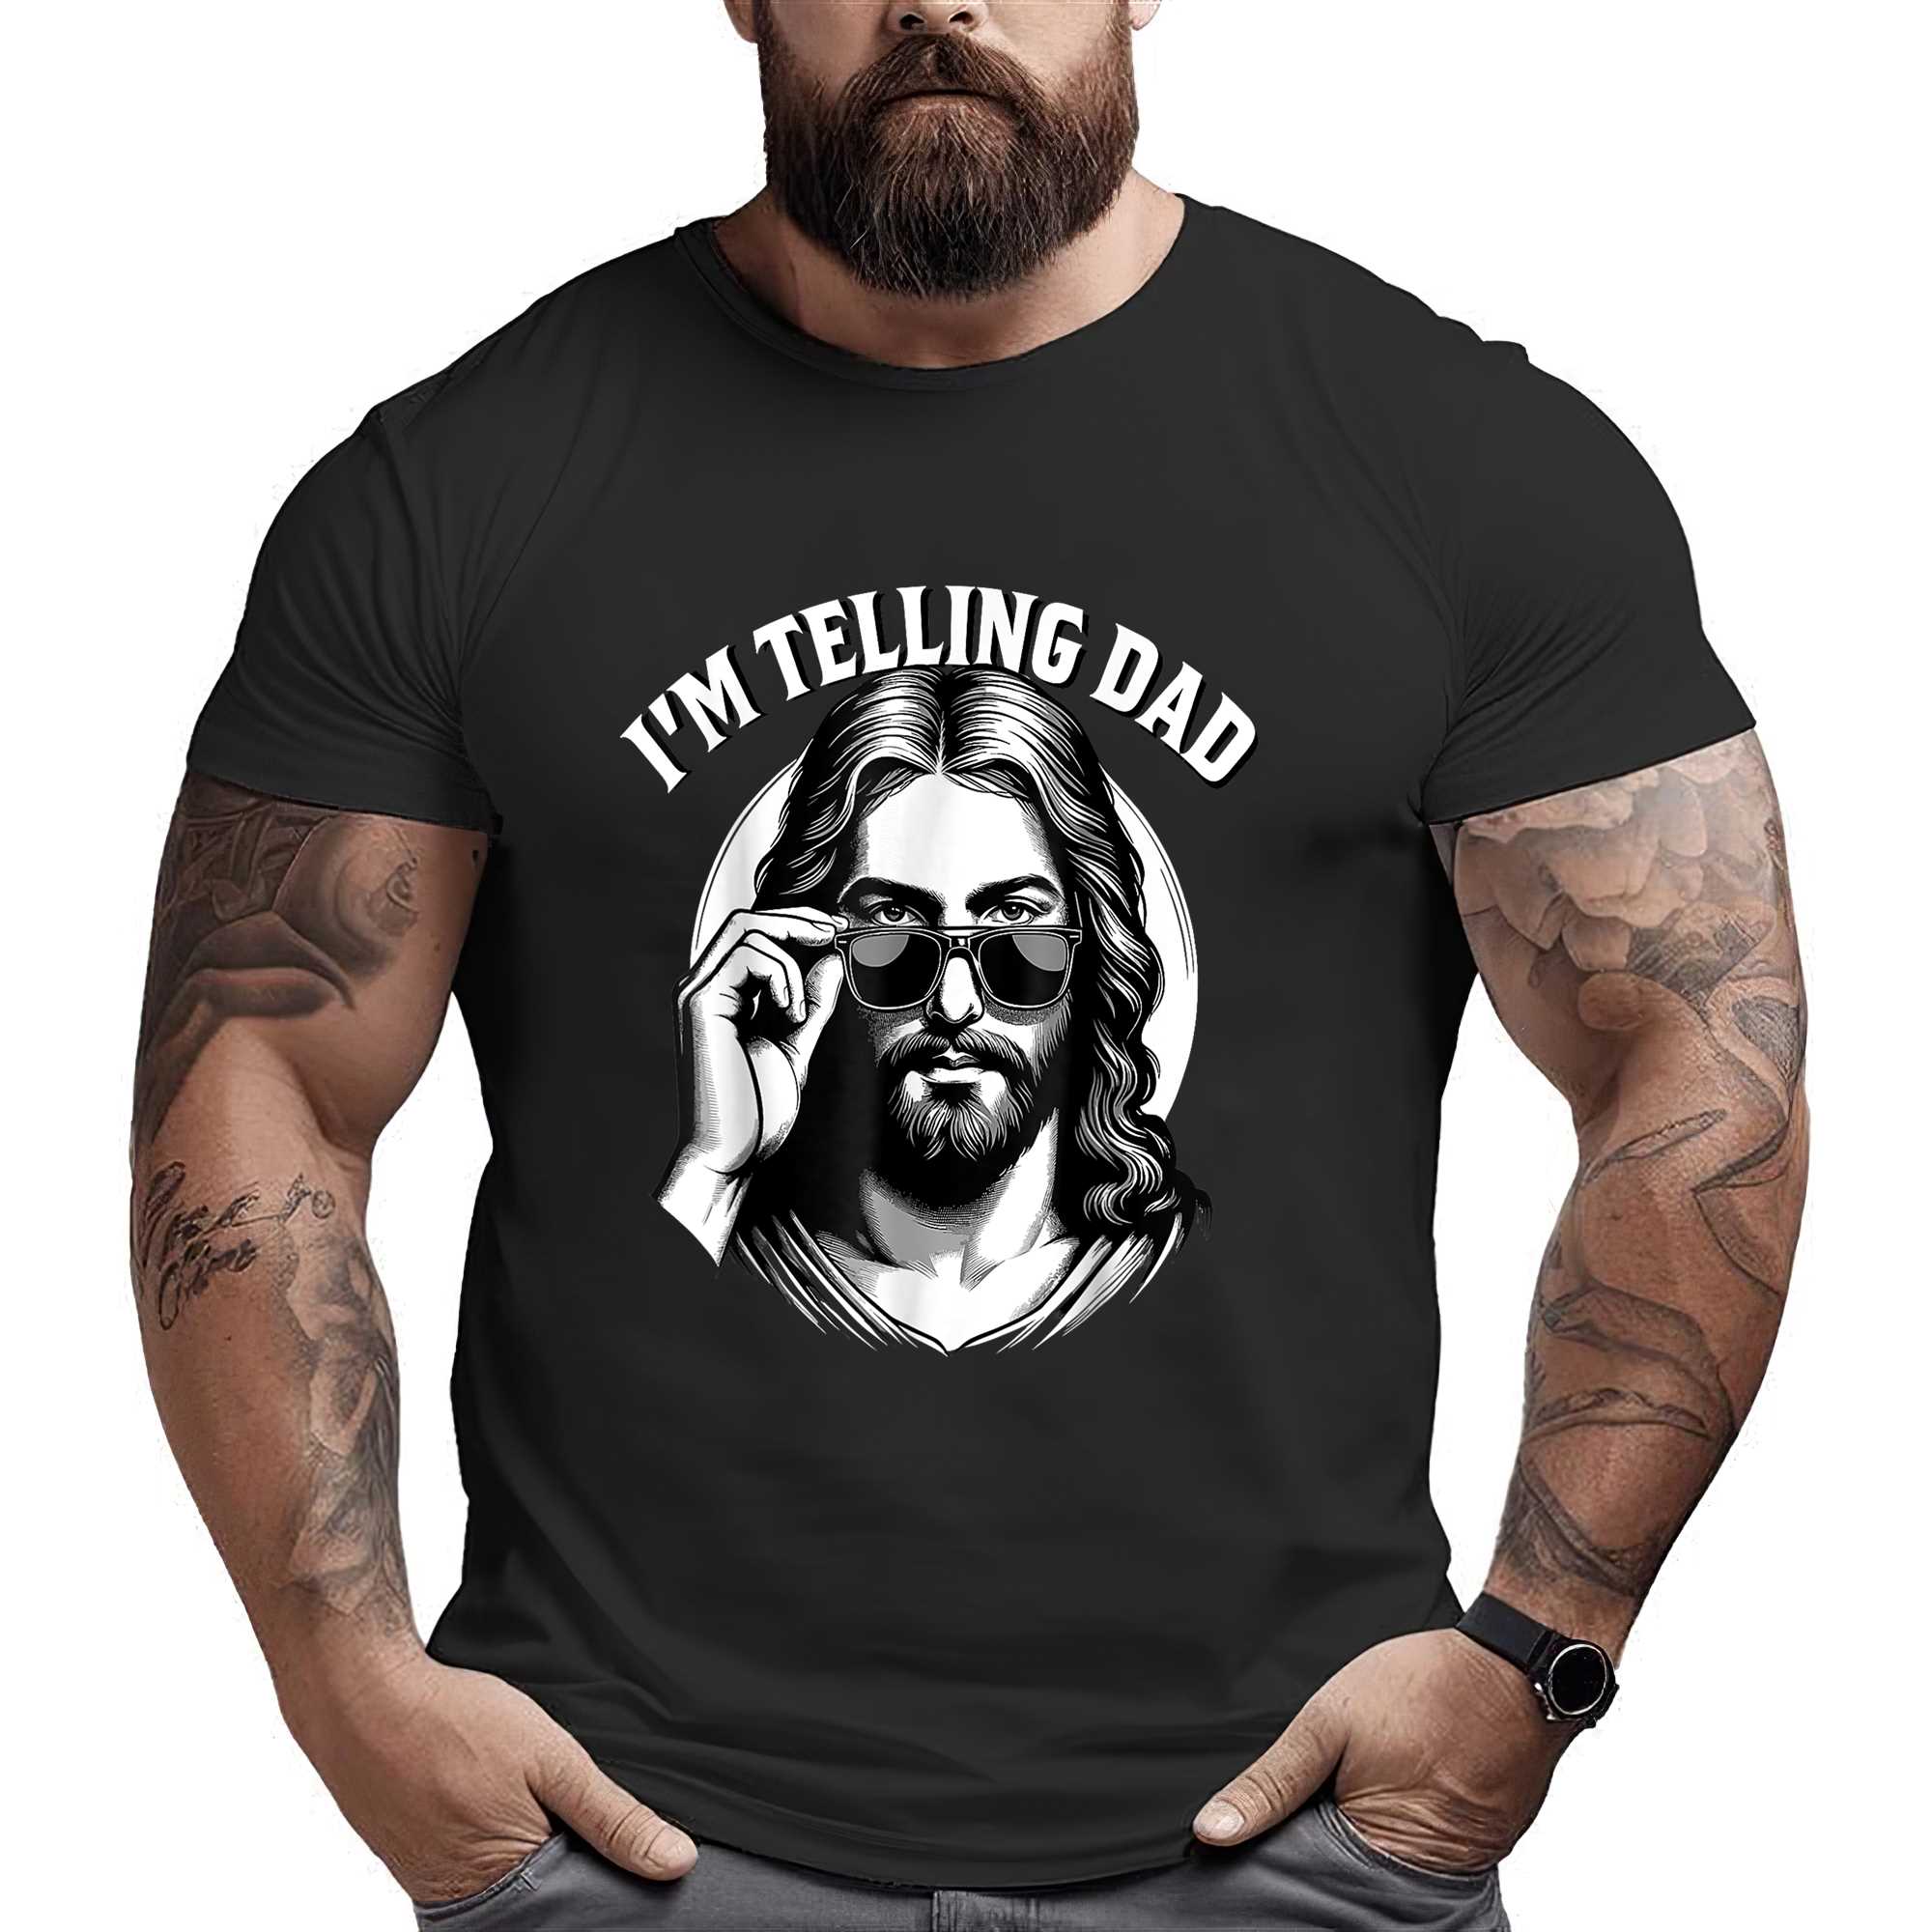 I’m Telling Dad Shirt Funny Religious Christian Jesus Meme T-shirt